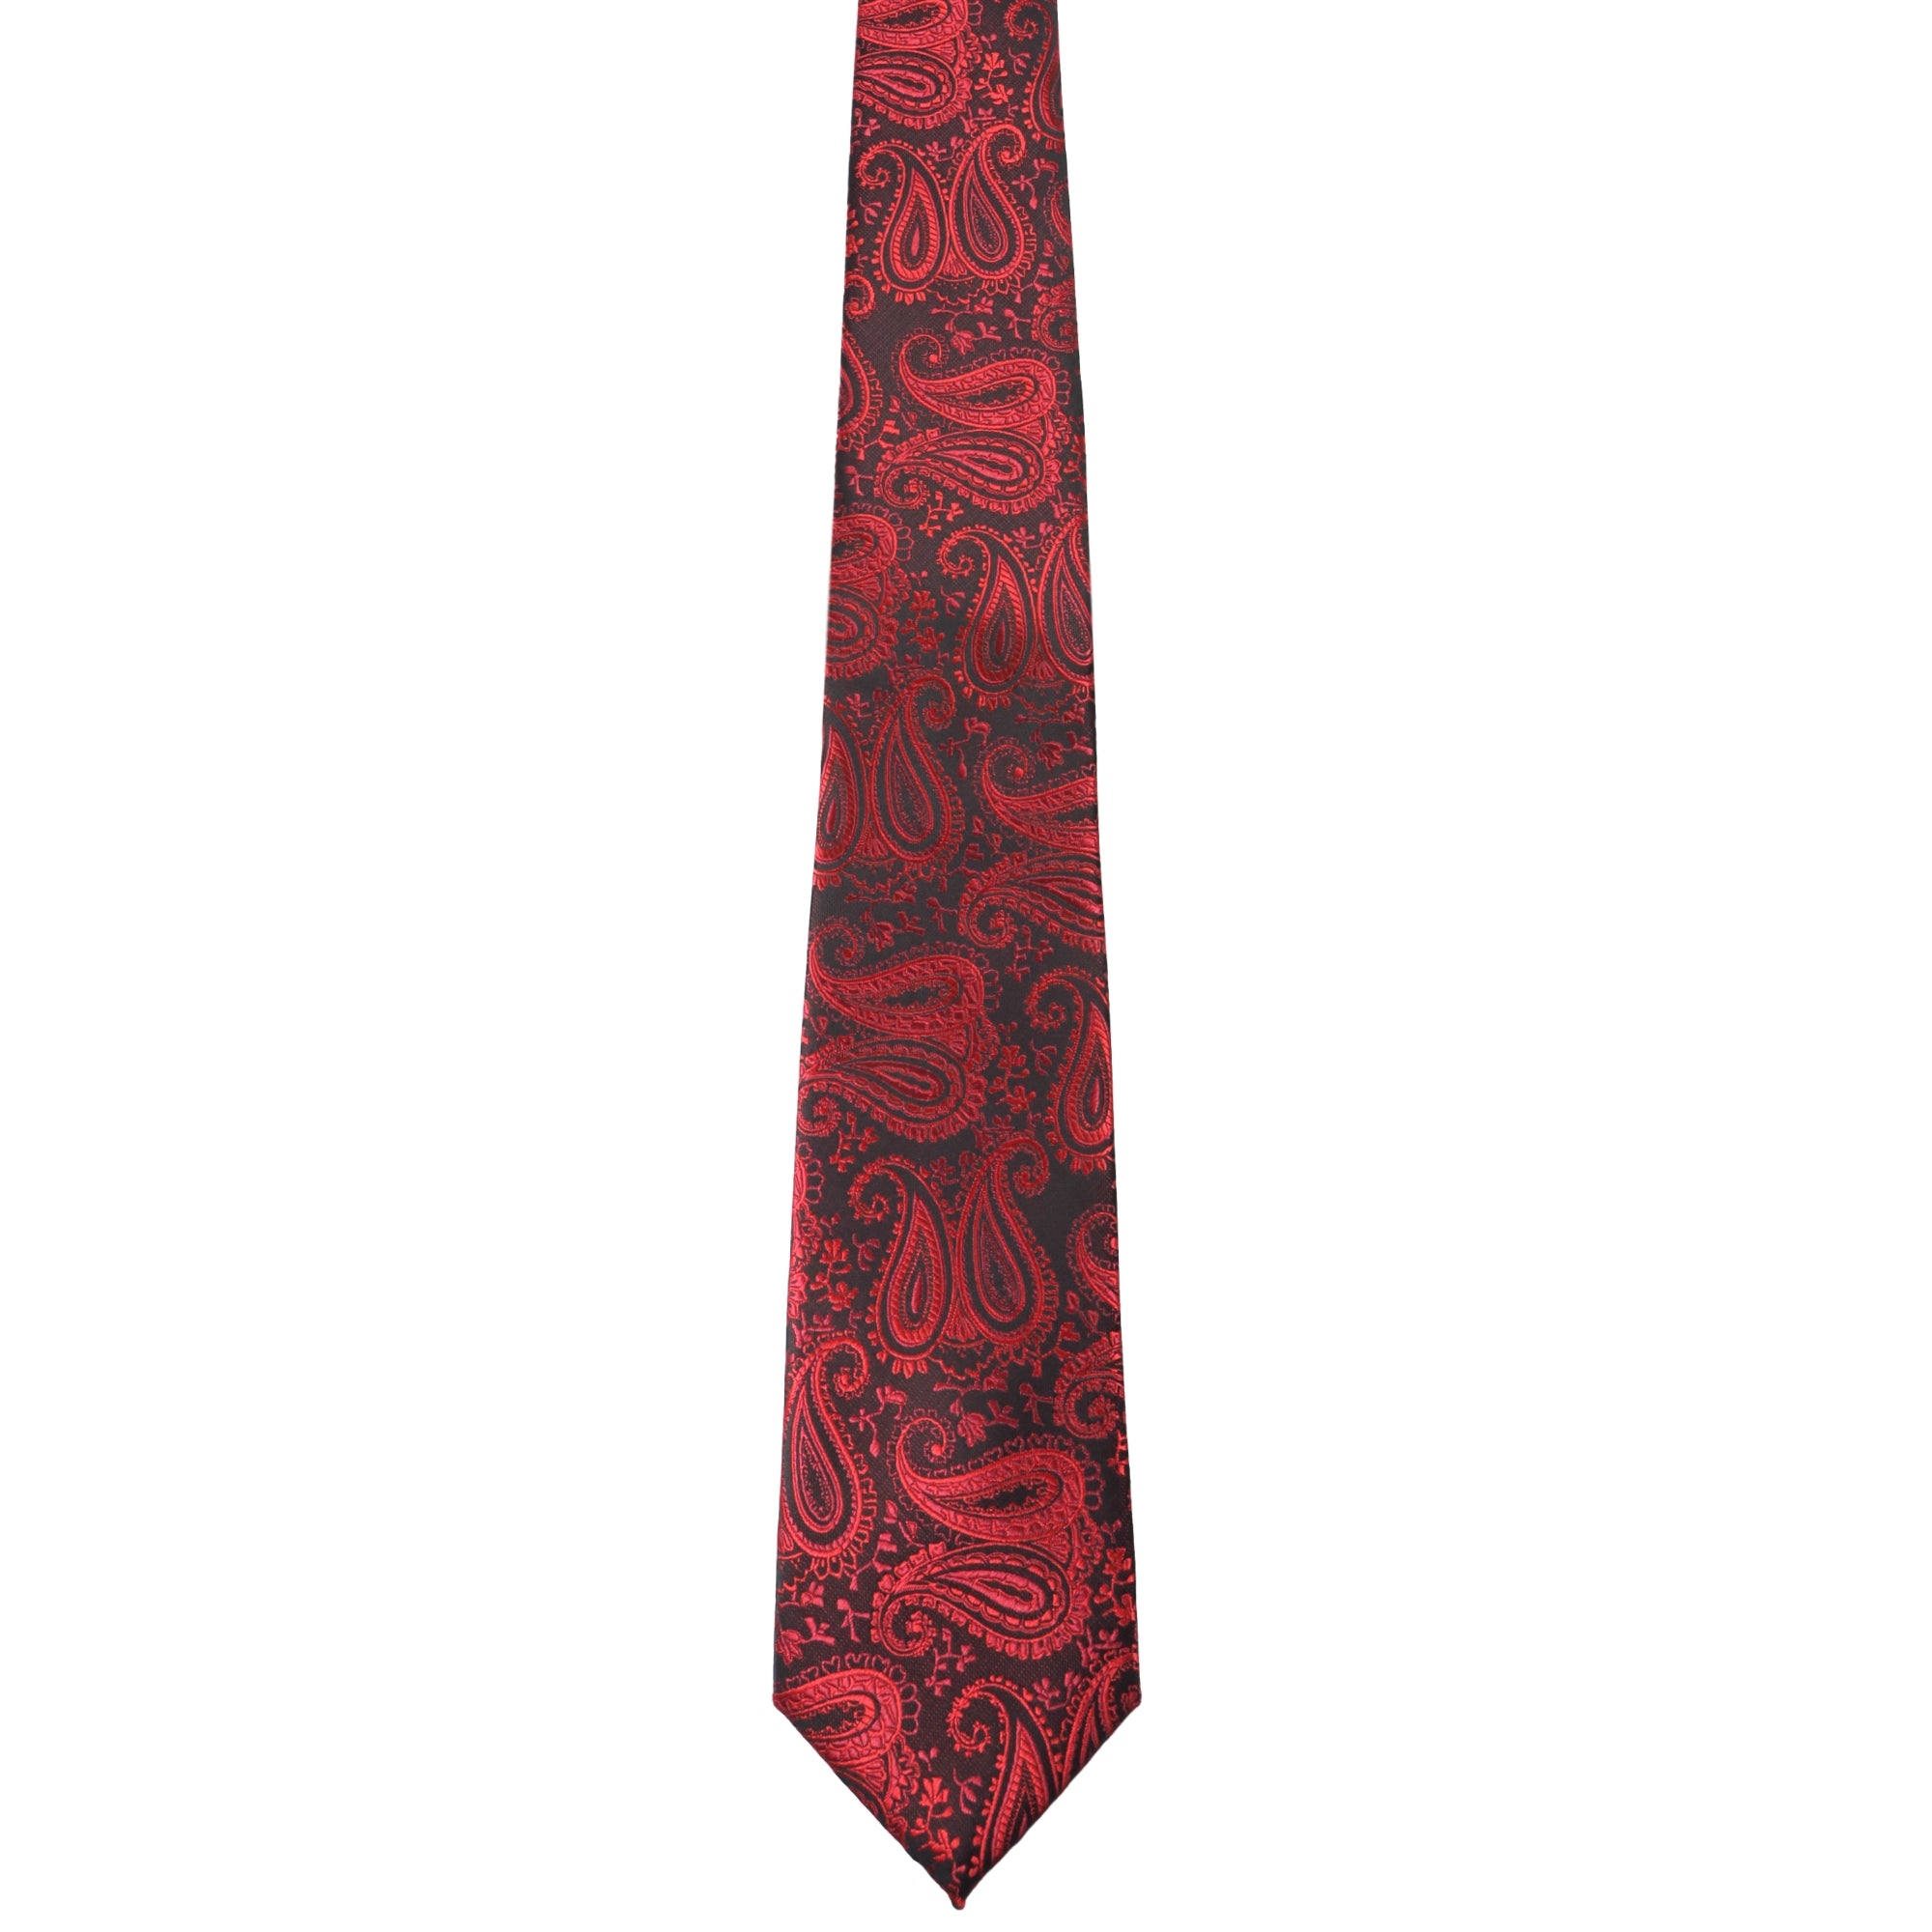 Paisley-Krawatte f. GASSANI Krawatten GASSANIshop.de Kaufen Designt Bordeaux-Rote | - Sie